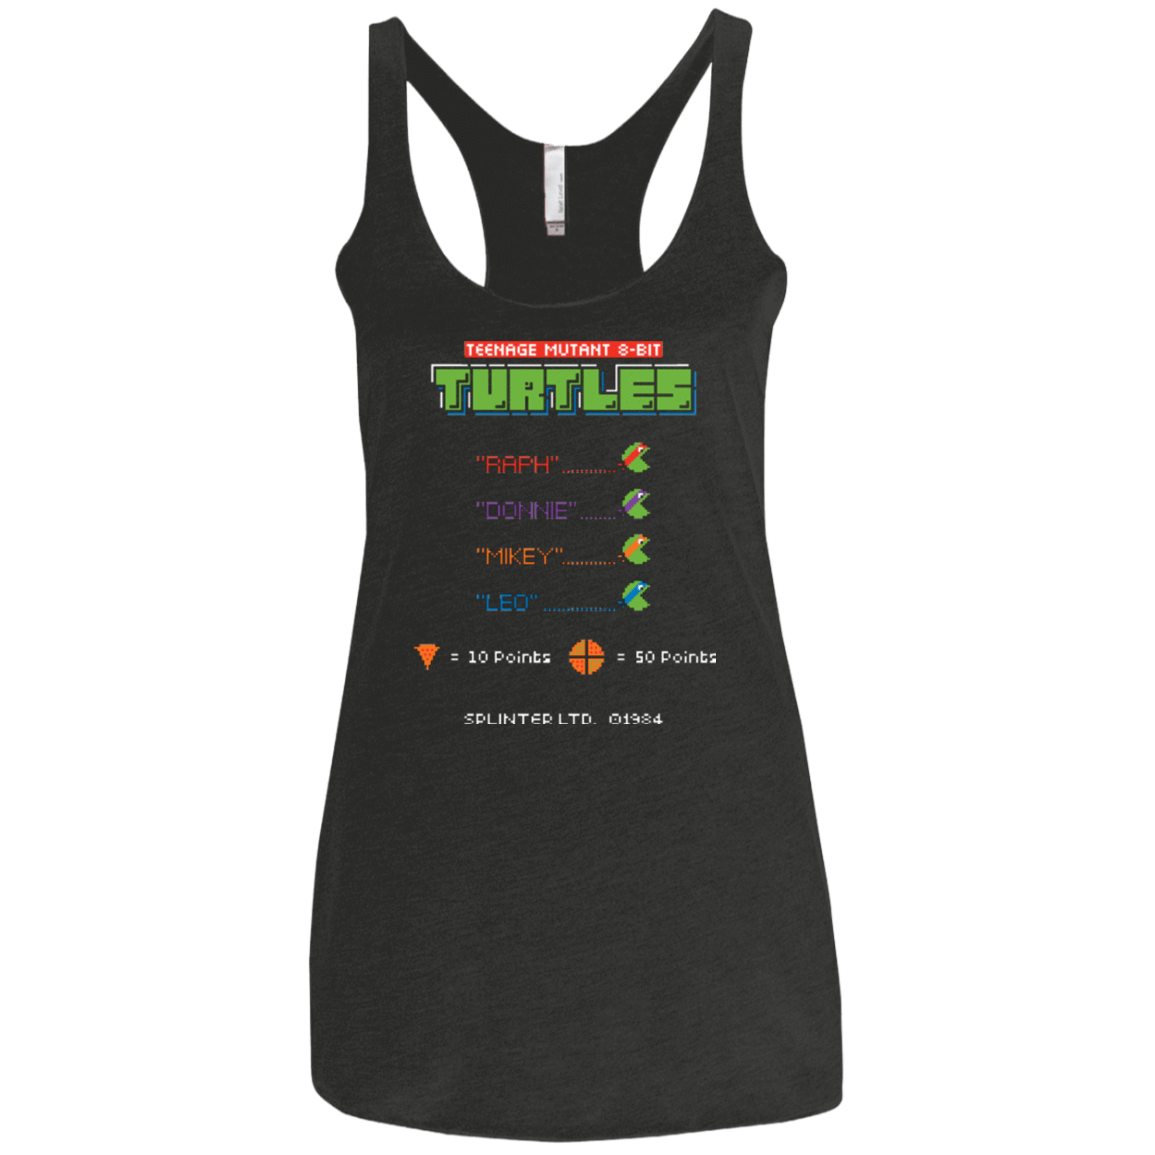 T-Shirts Vintage Black / X-Small 8 Bit Turtles Women's Triblend Racerback Tank